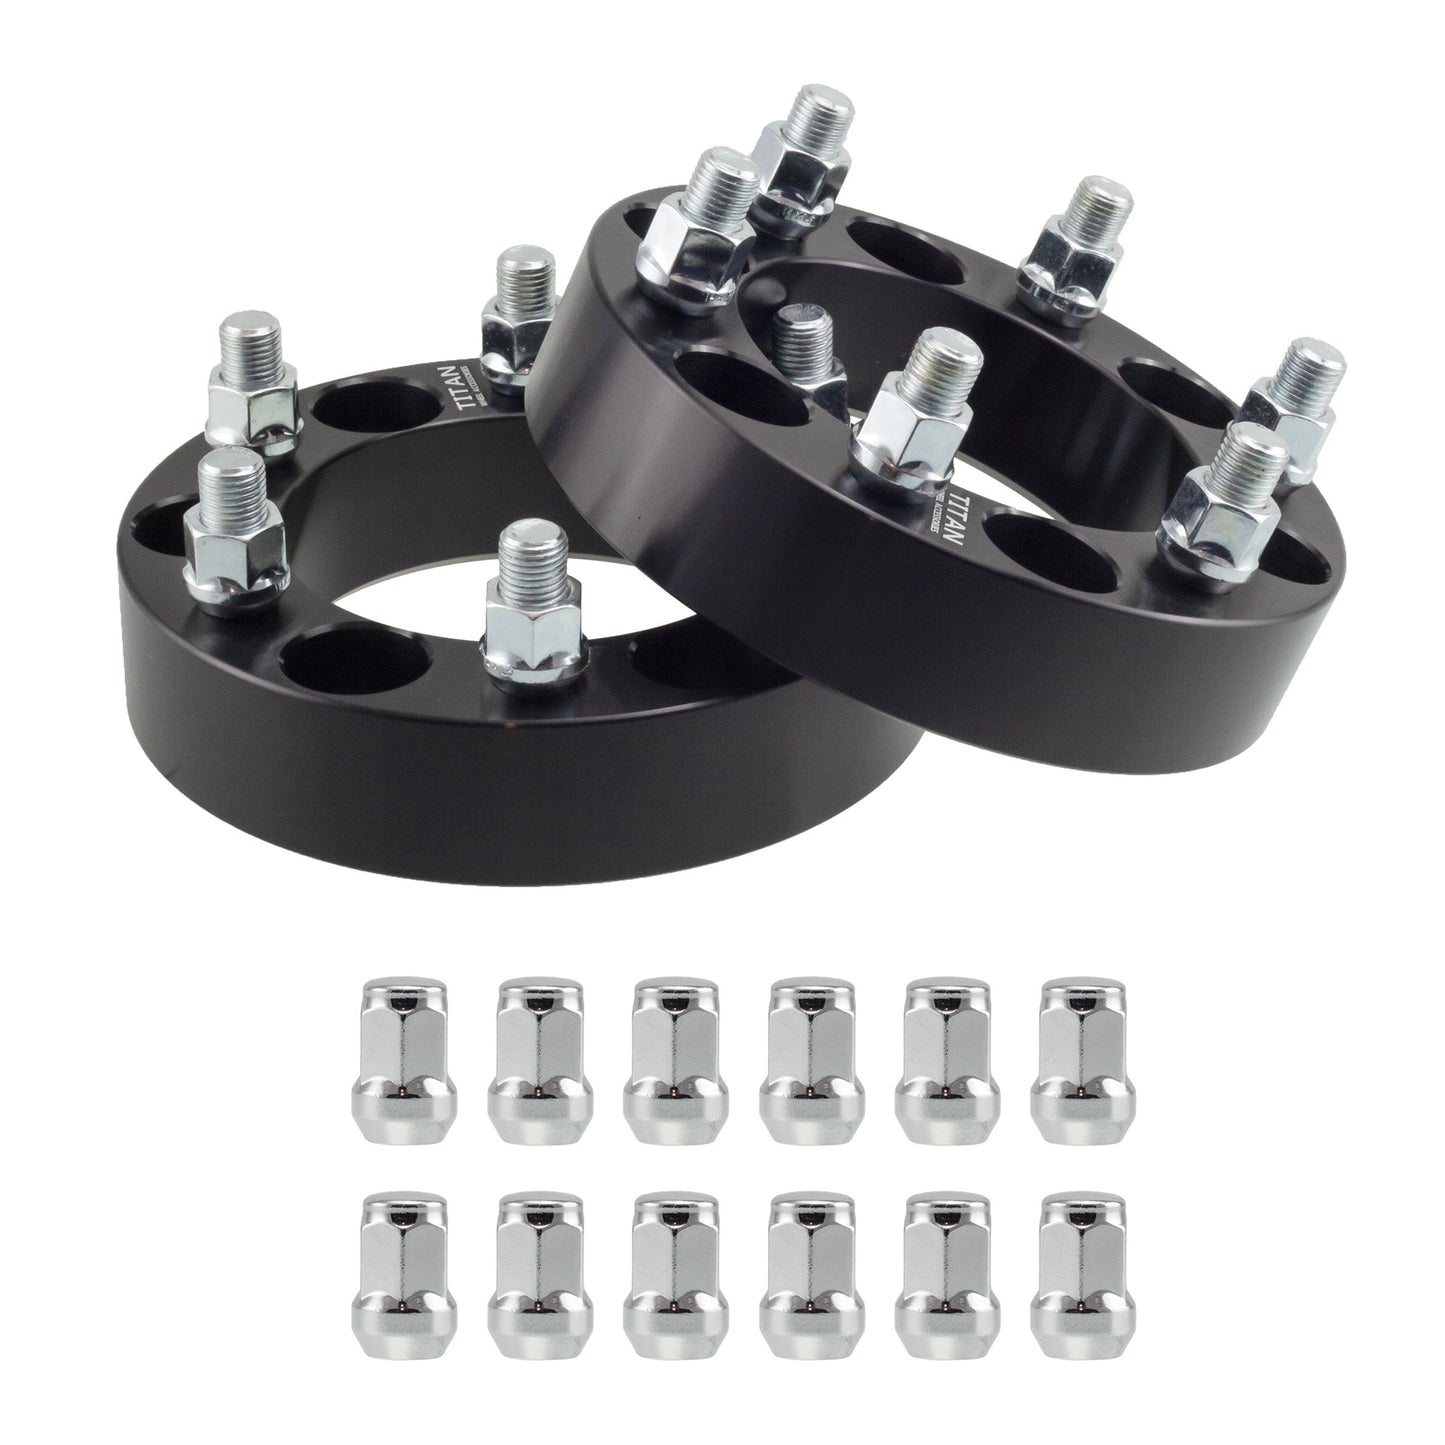 2" (50mm) Titan Wheel Spacers for GMC Sierra Yukon | 6x5.5 (6x139.7) | 78.1 Hubcentric |14x1.5 Studs | Titan Wheel Accessories